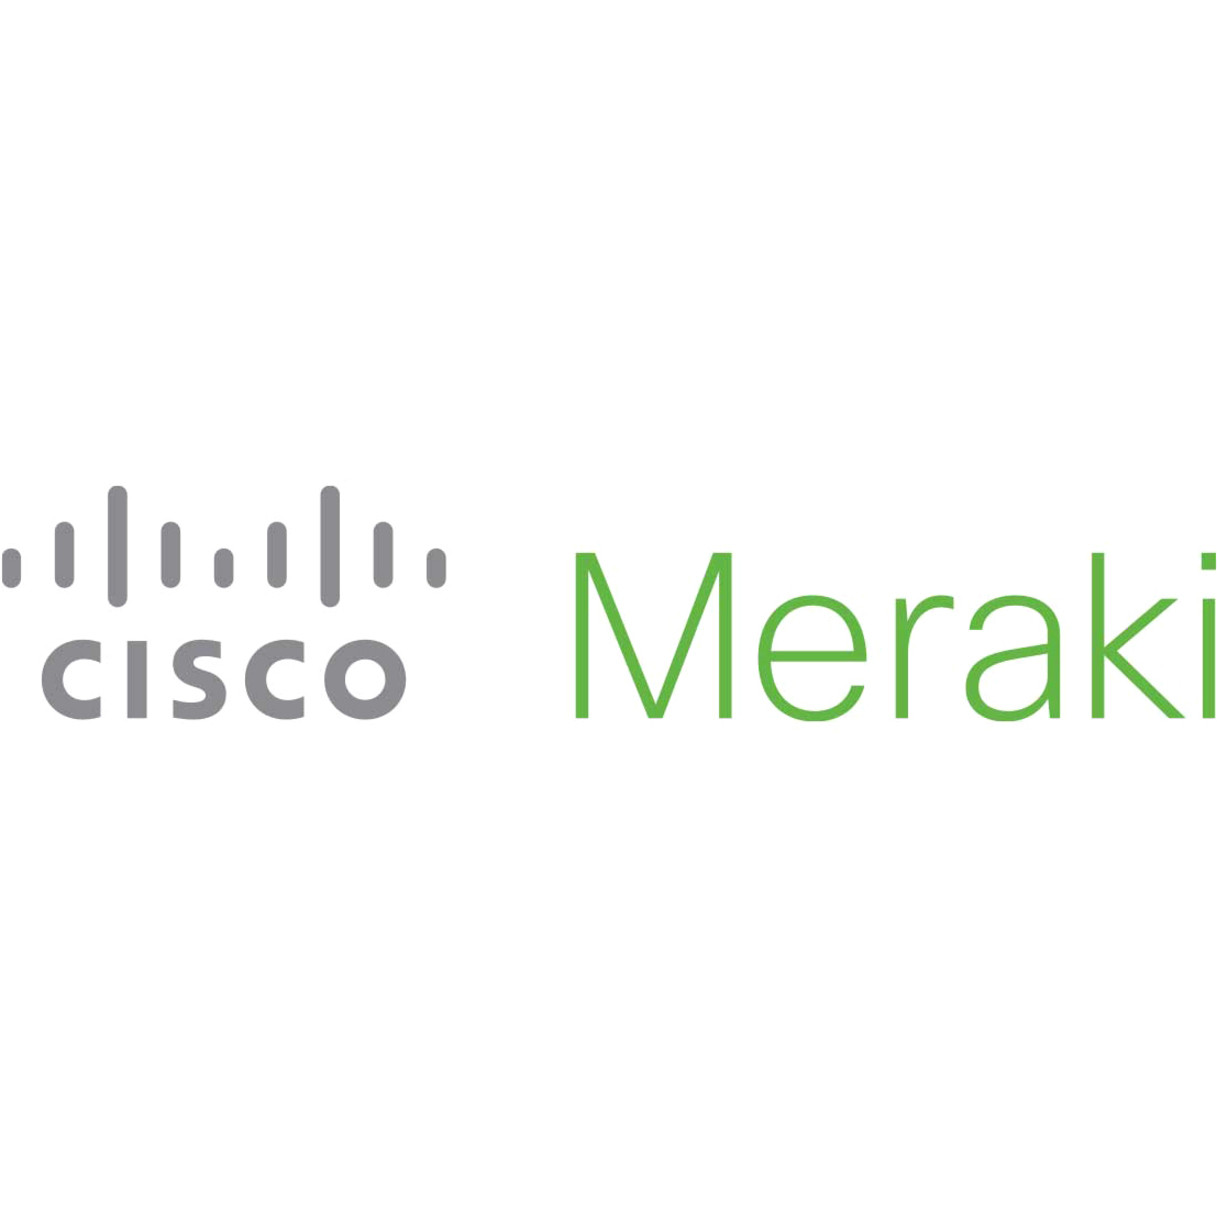 Cisco Meraki MT EnterpriseLicense and Support1 DayMT Sensor1 Day License Validation Period LIC-MT-1D